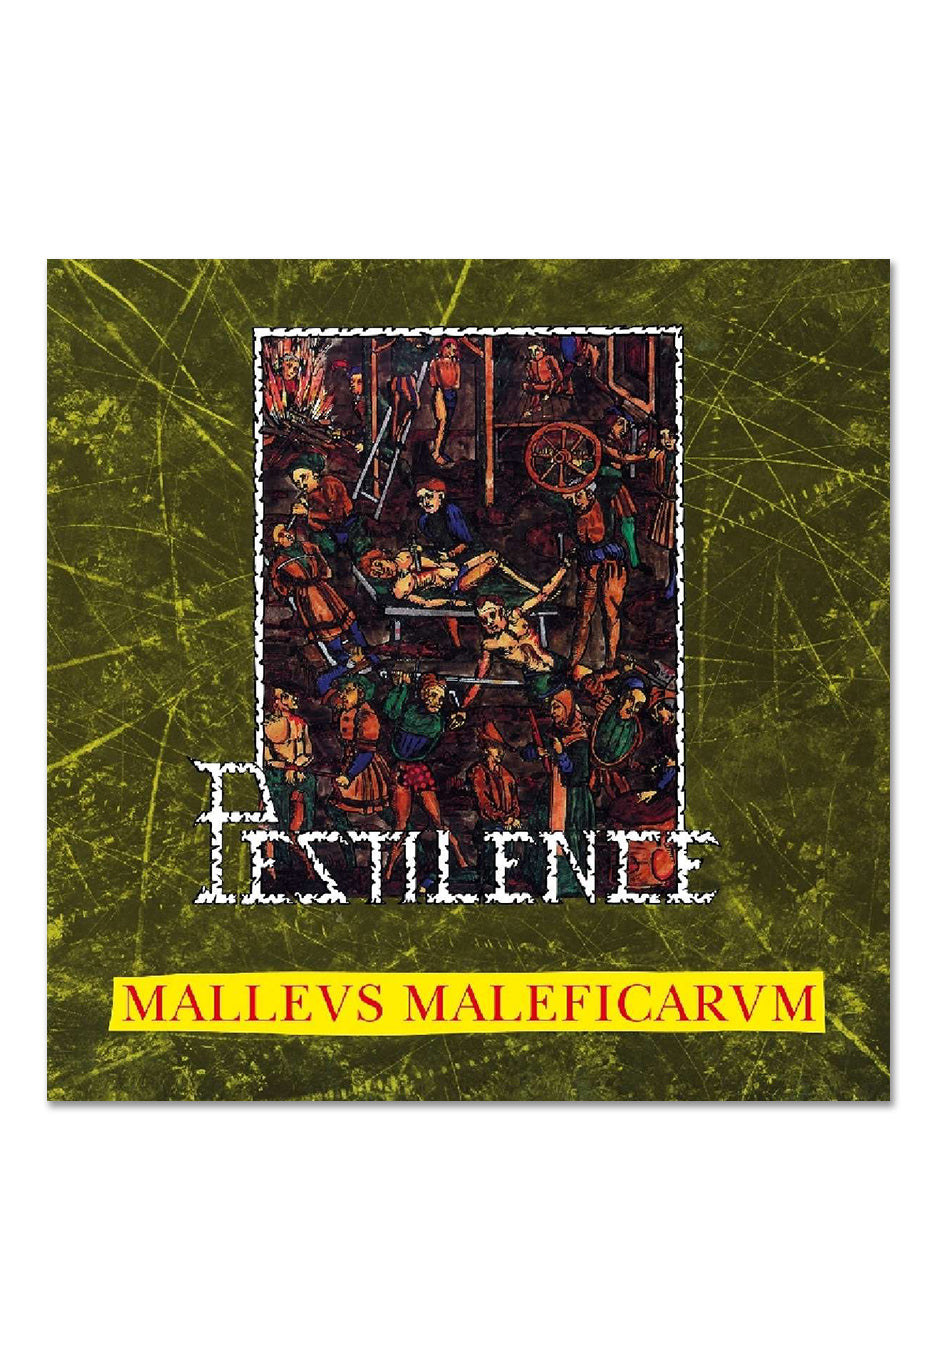 Pestilence - Malleus Maleficarum (Remastered) Ltd. Green - Marbled Vinyl